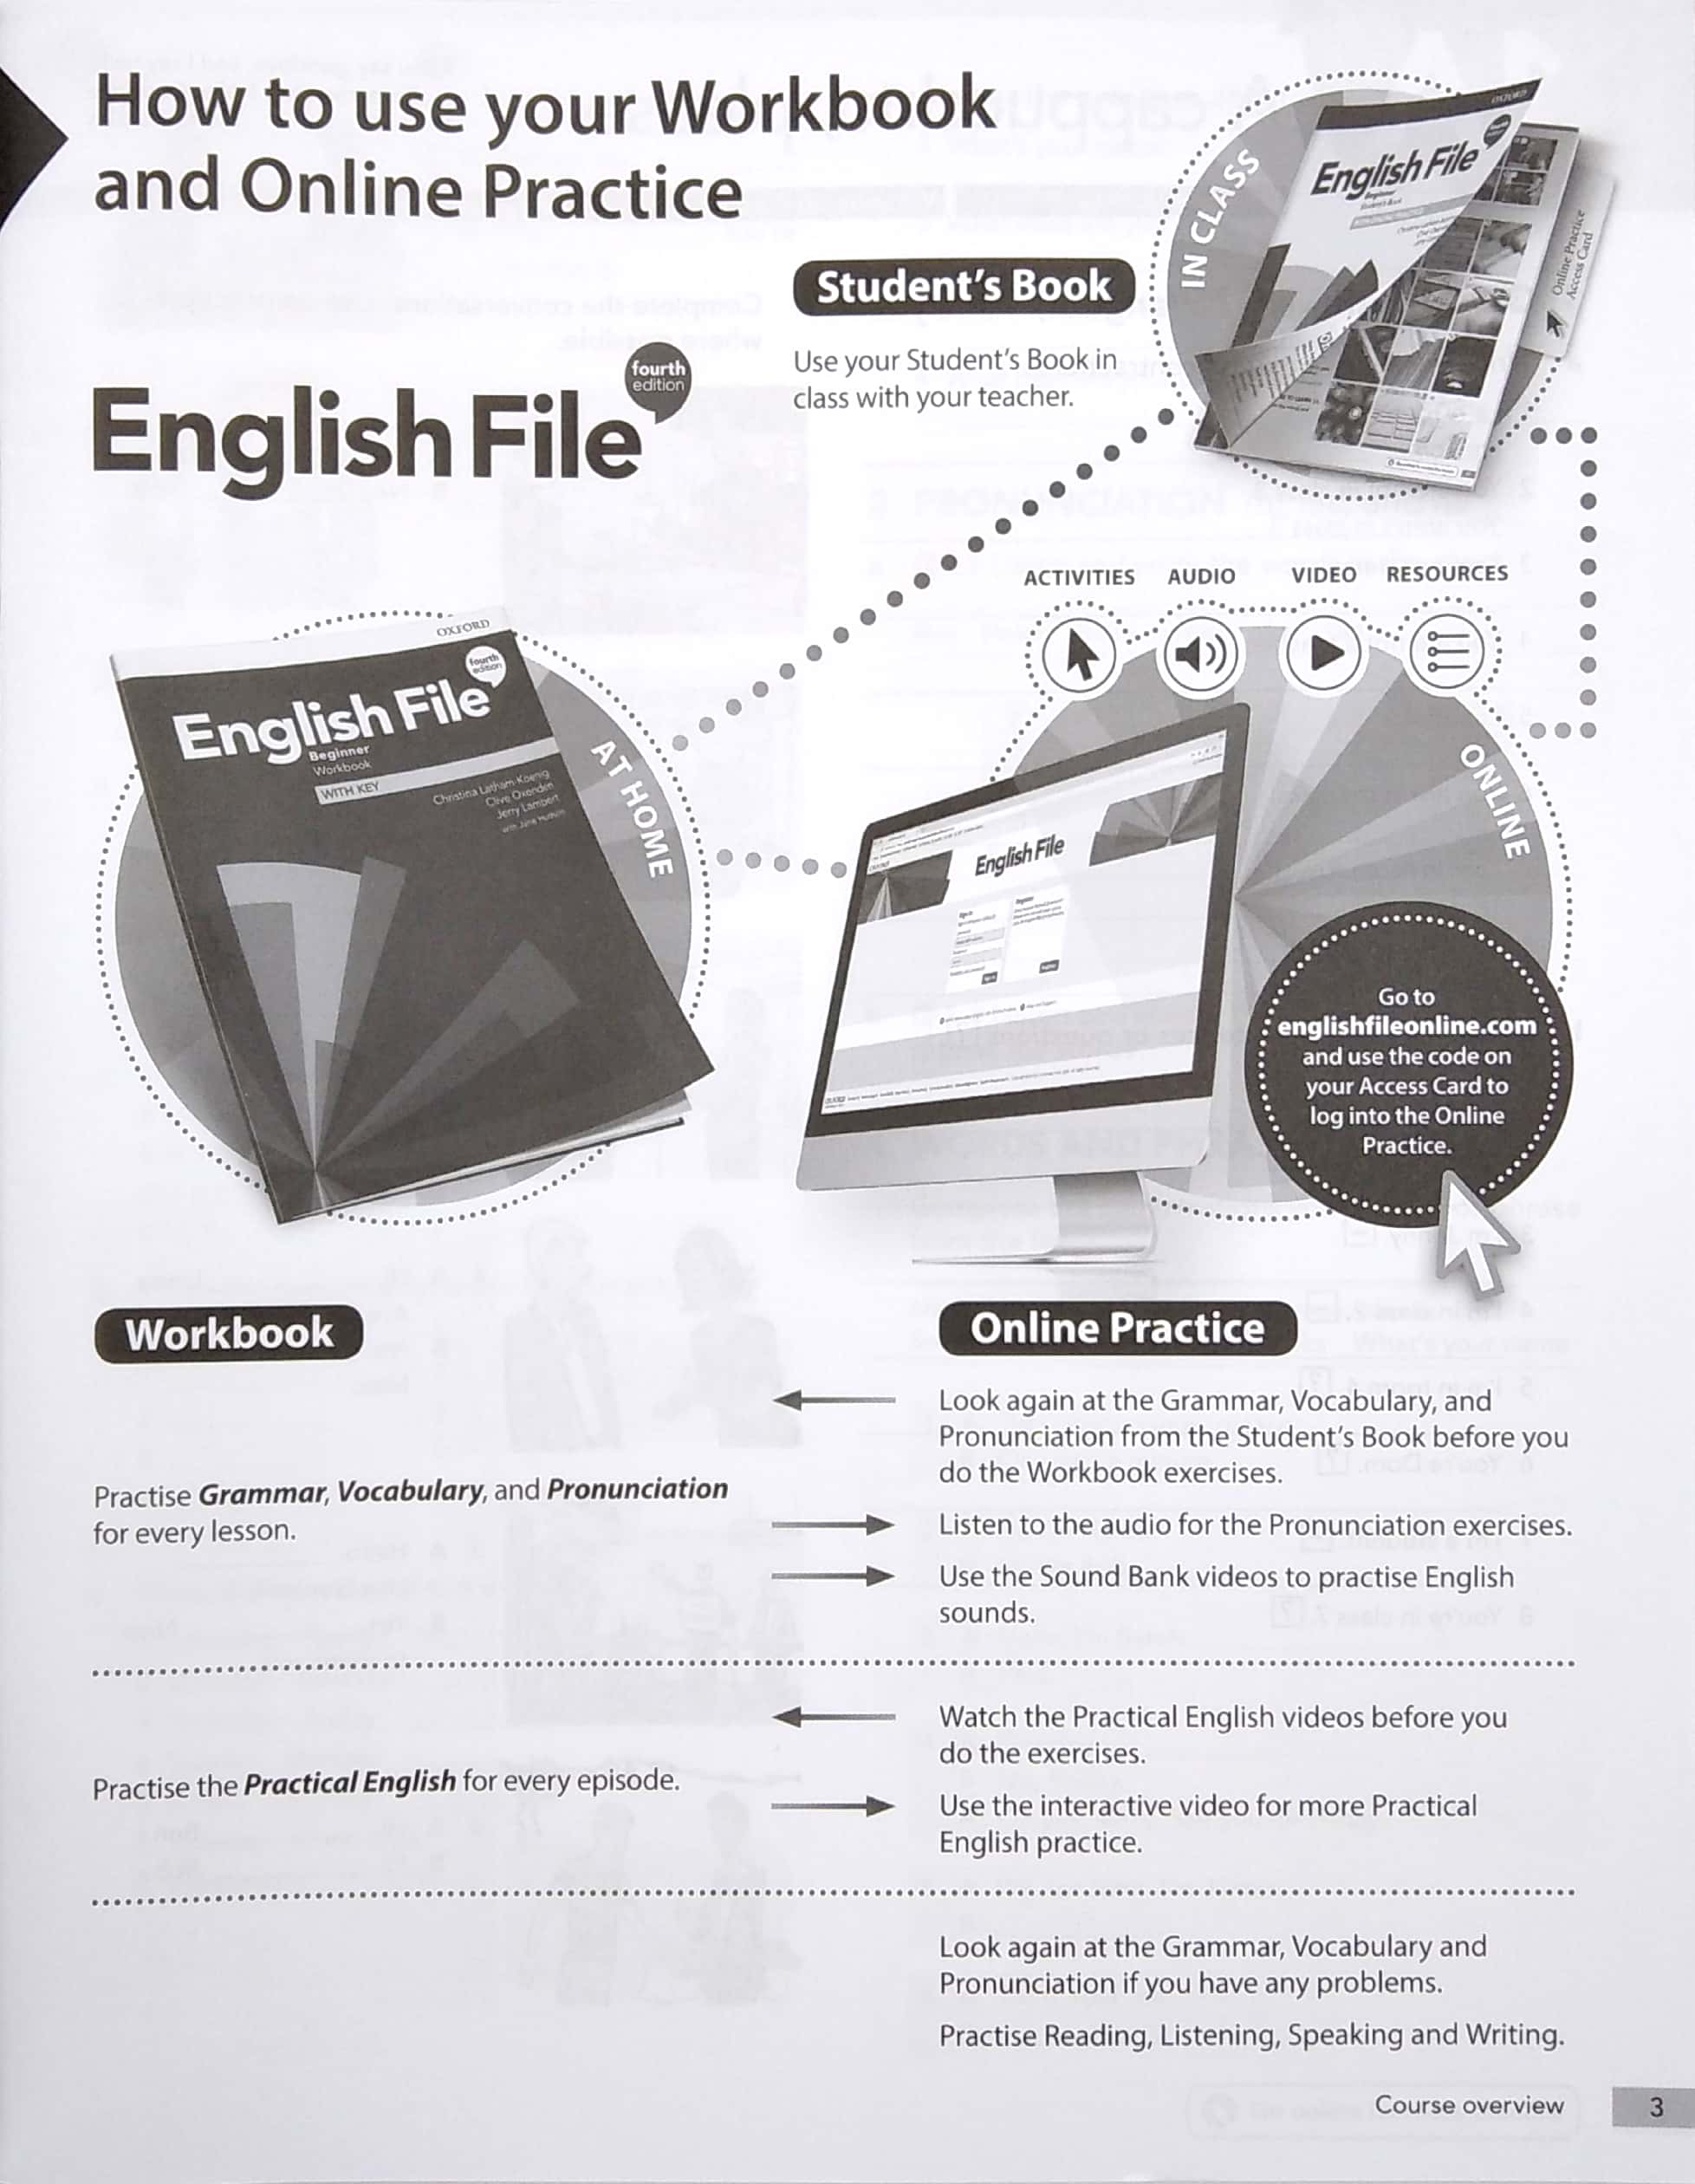 Sách - English File: Beginner: Workbook With Key